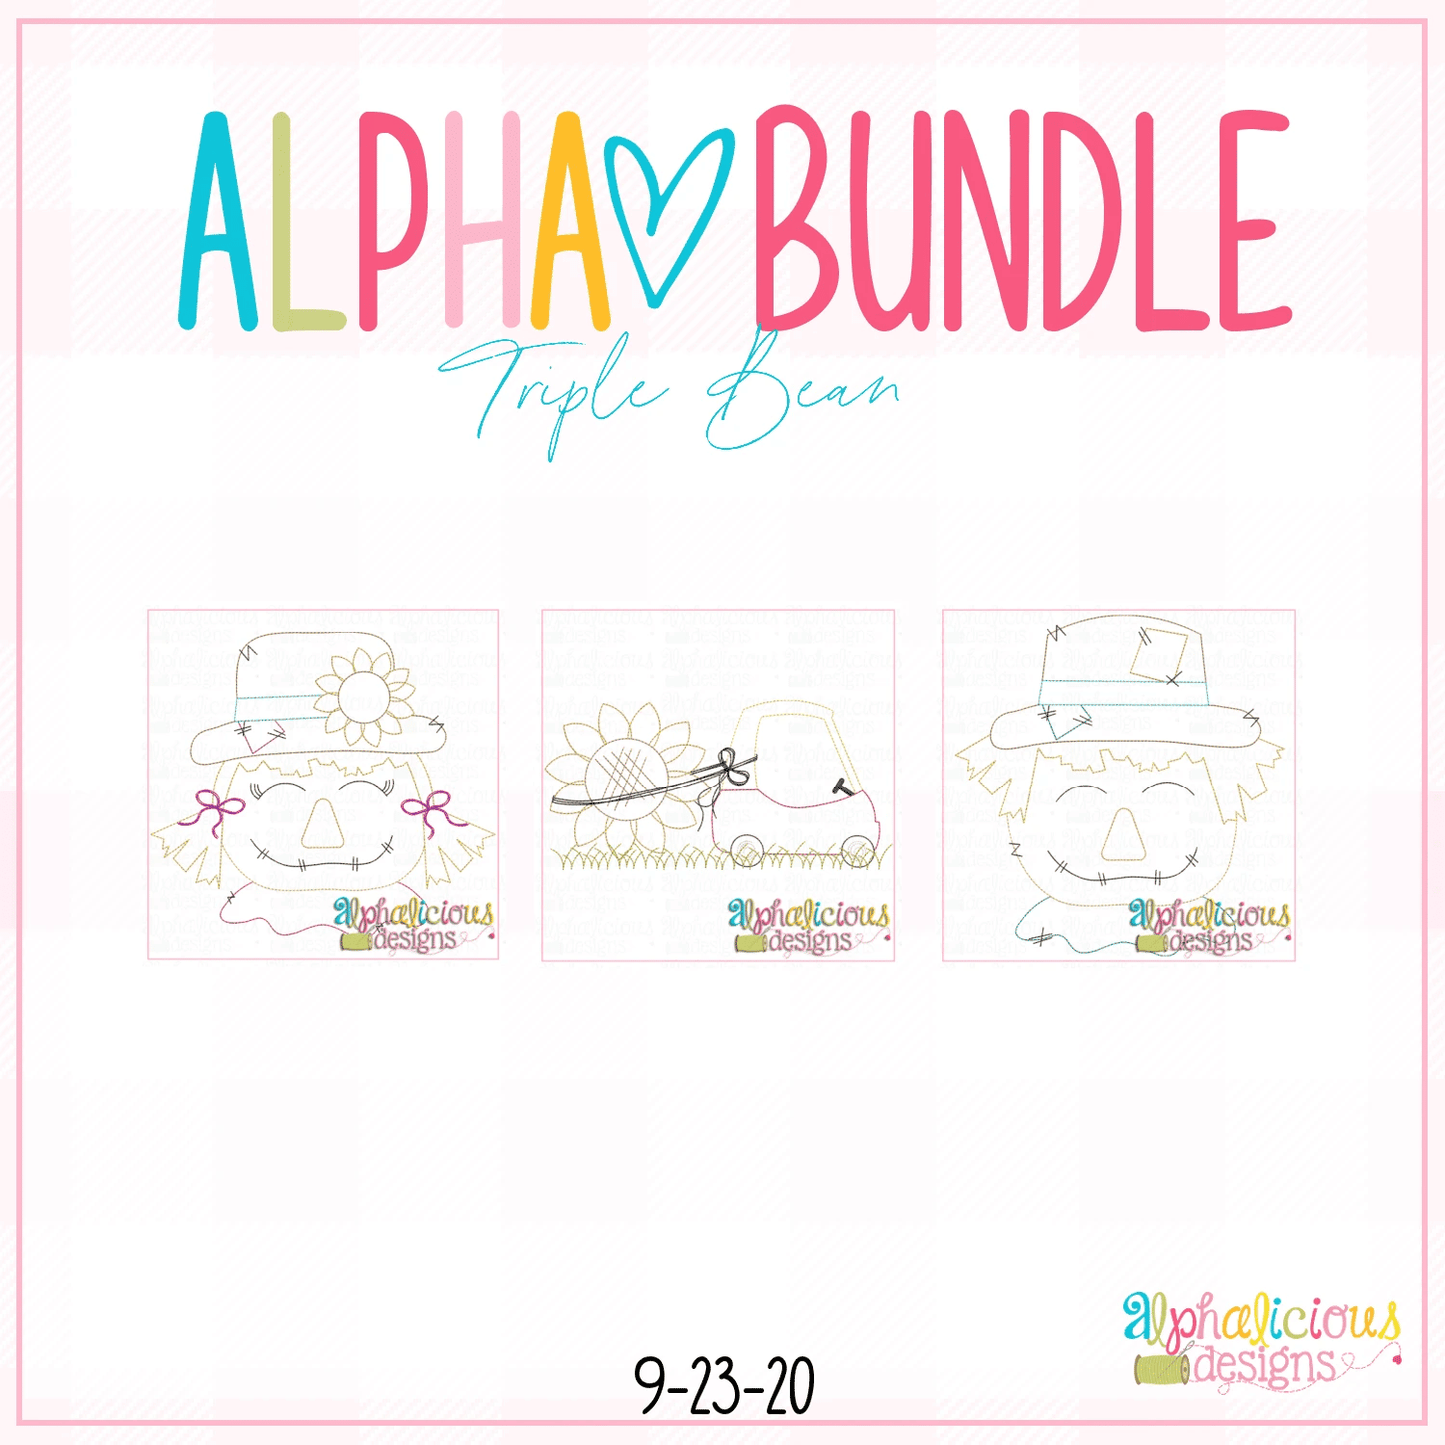 ALPHA BUNDLE-9/25/20 Release-Triple Bean Stitch